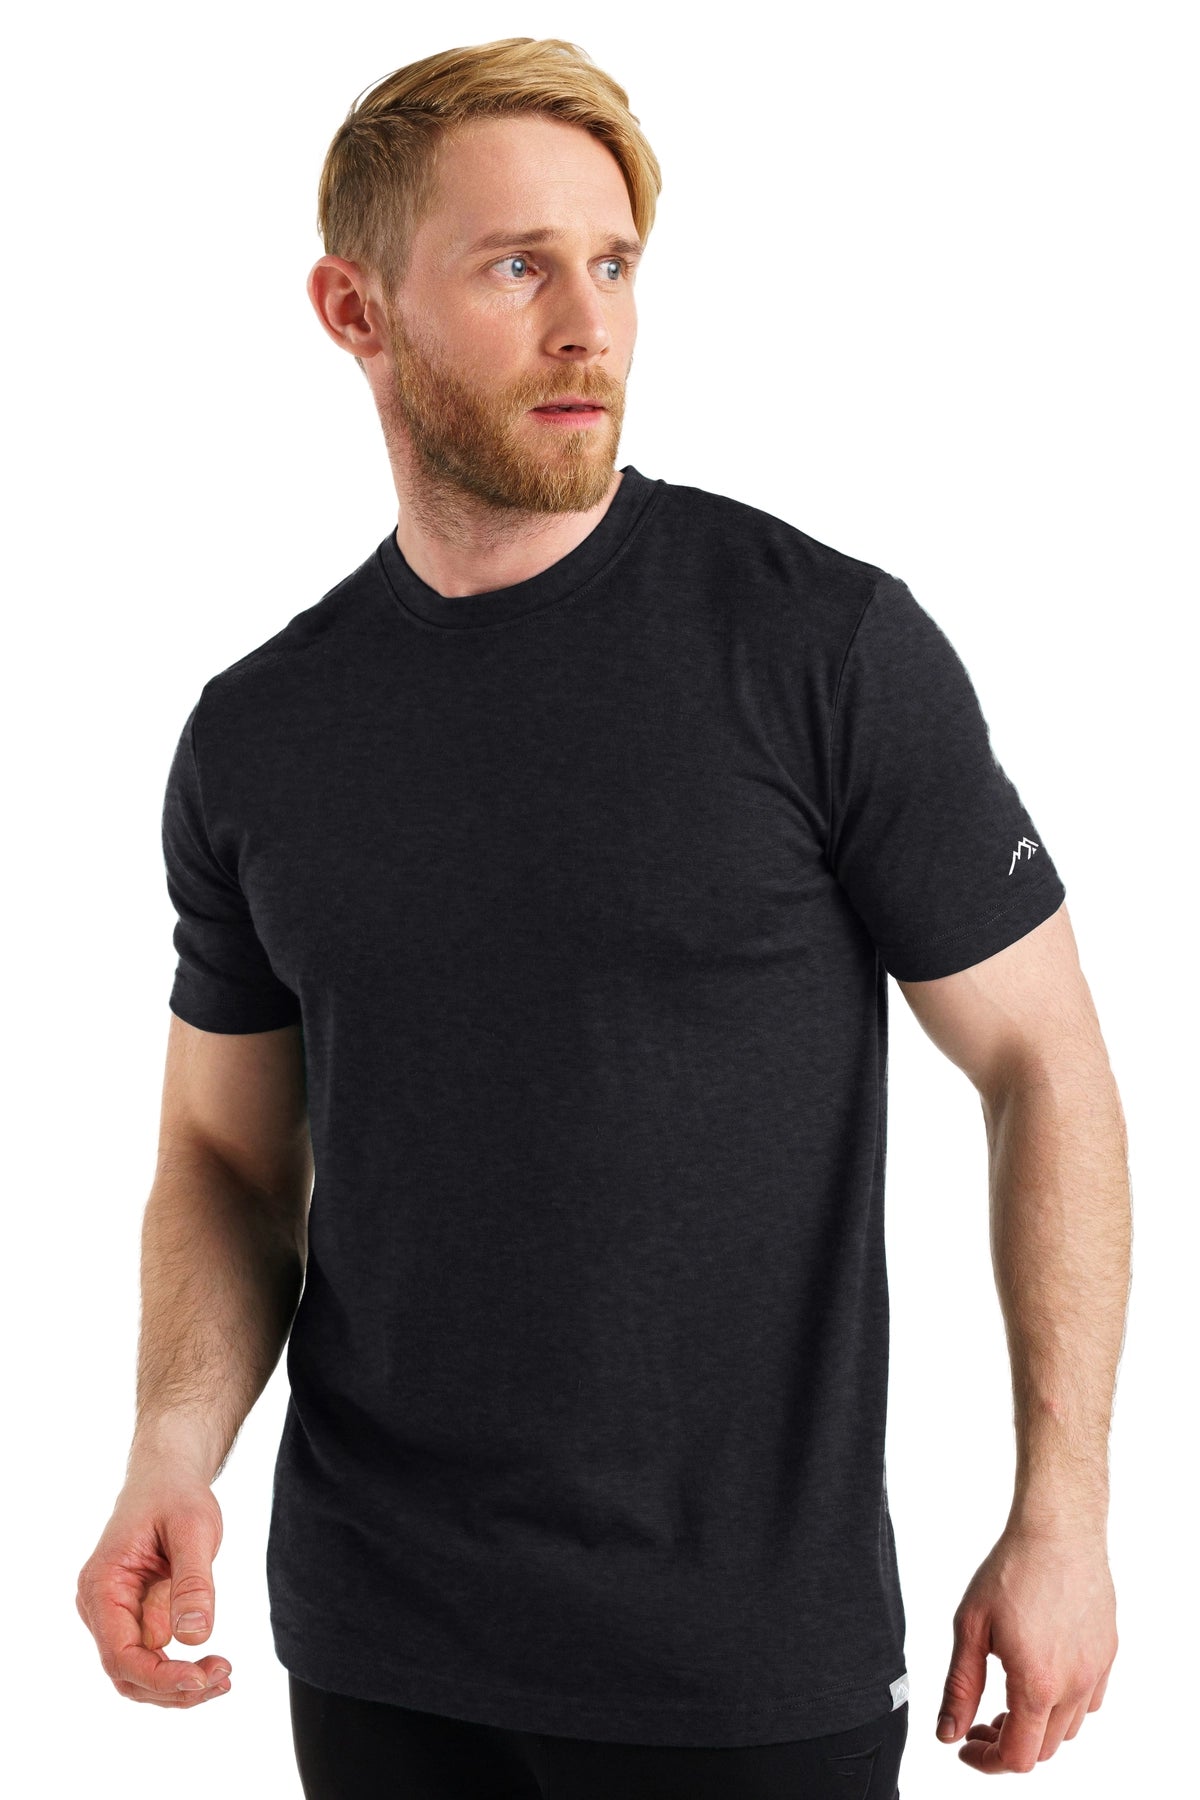 Merino.tech Merino Wool Base Layer - Mens 100% Merino Wool Long Sleeve  Thermal Shirts Lite, Midweight, Heavyweight + Socks